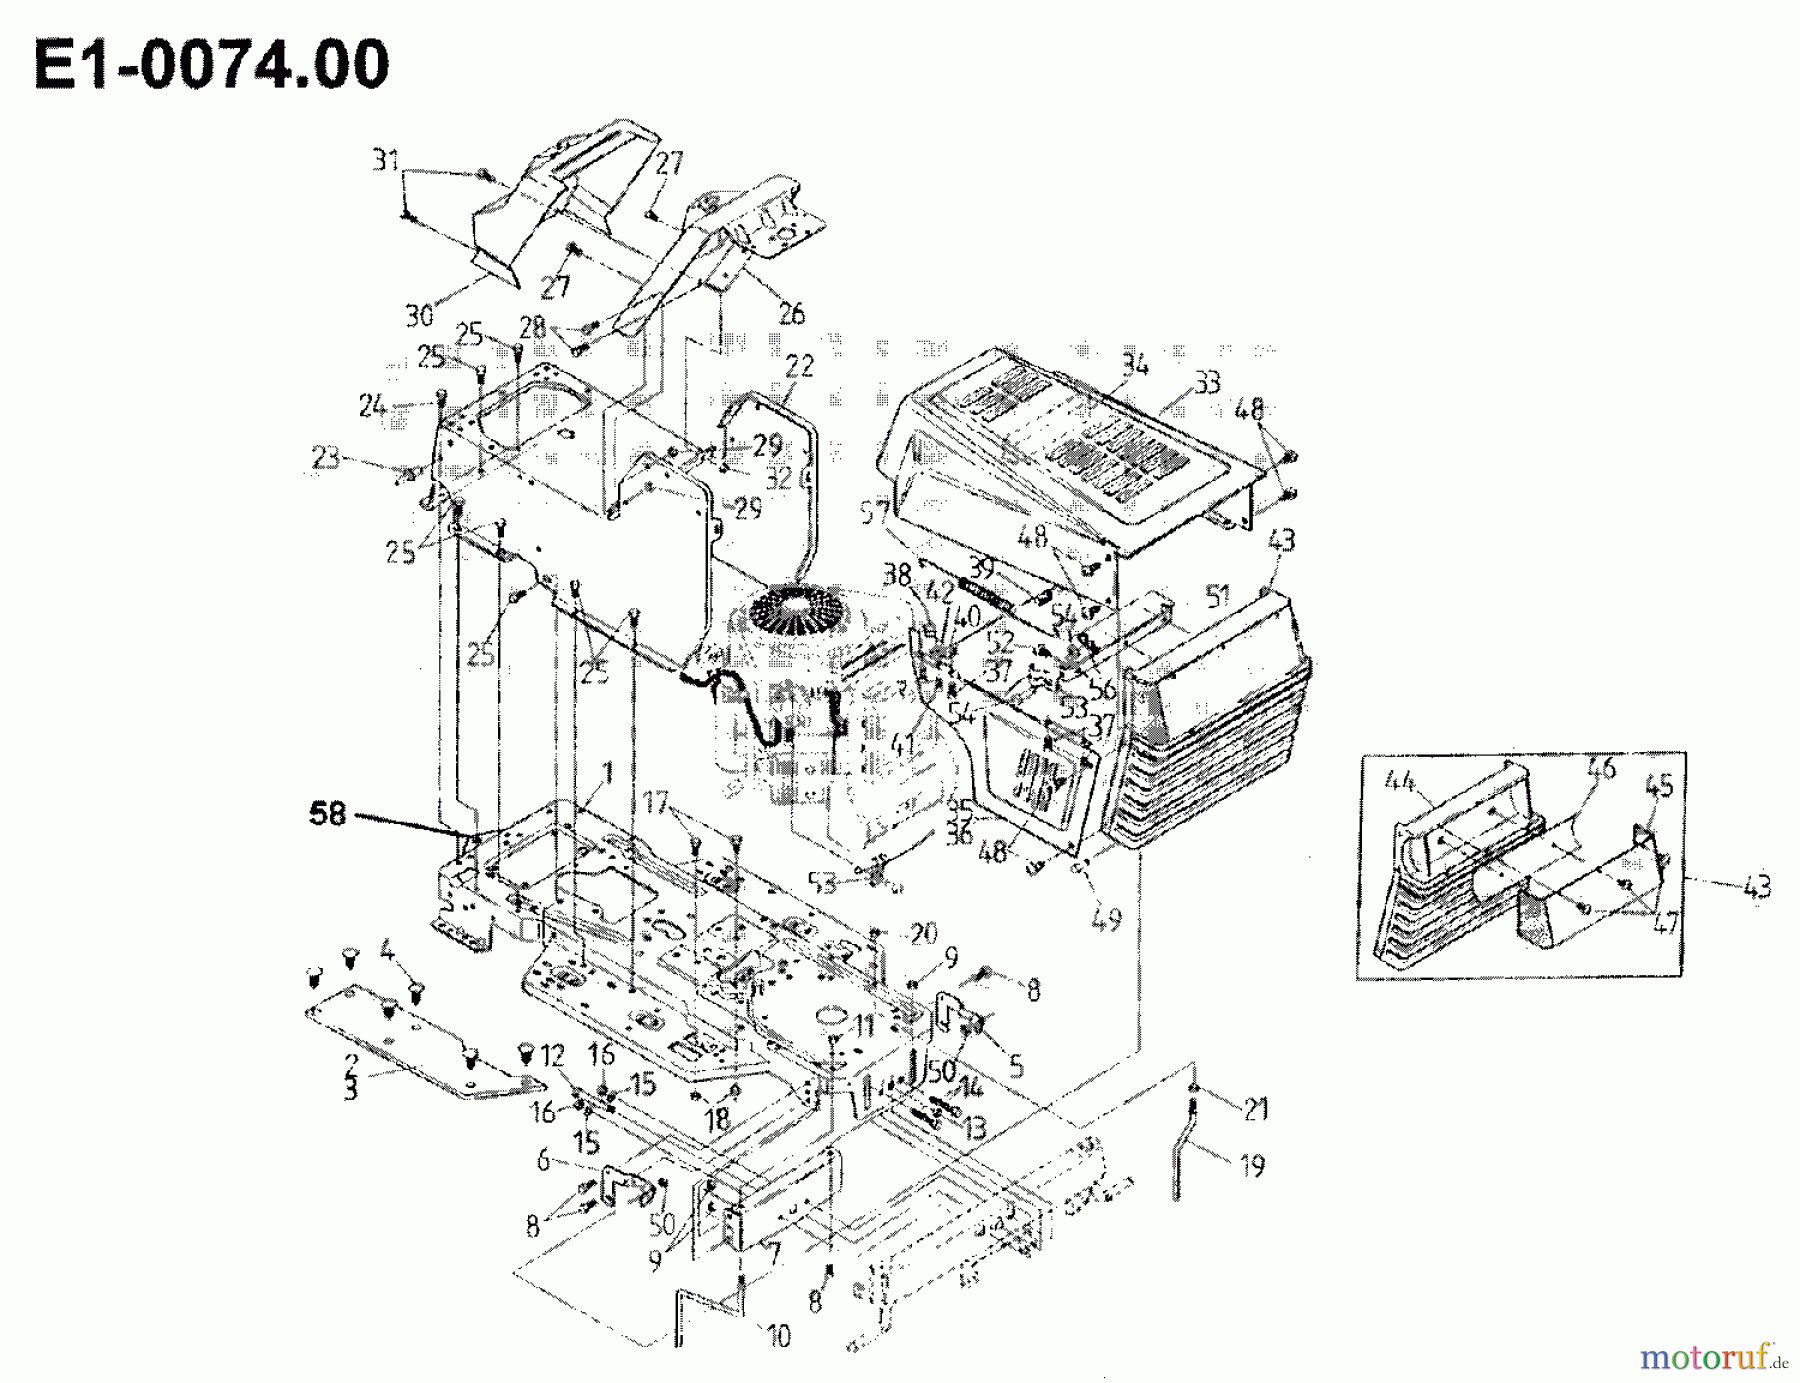  Gutbrod Rasentraktoren 1114 AWS 00097.01  (1992) Armaturenbrett, Motorhaube, Sitzwanne